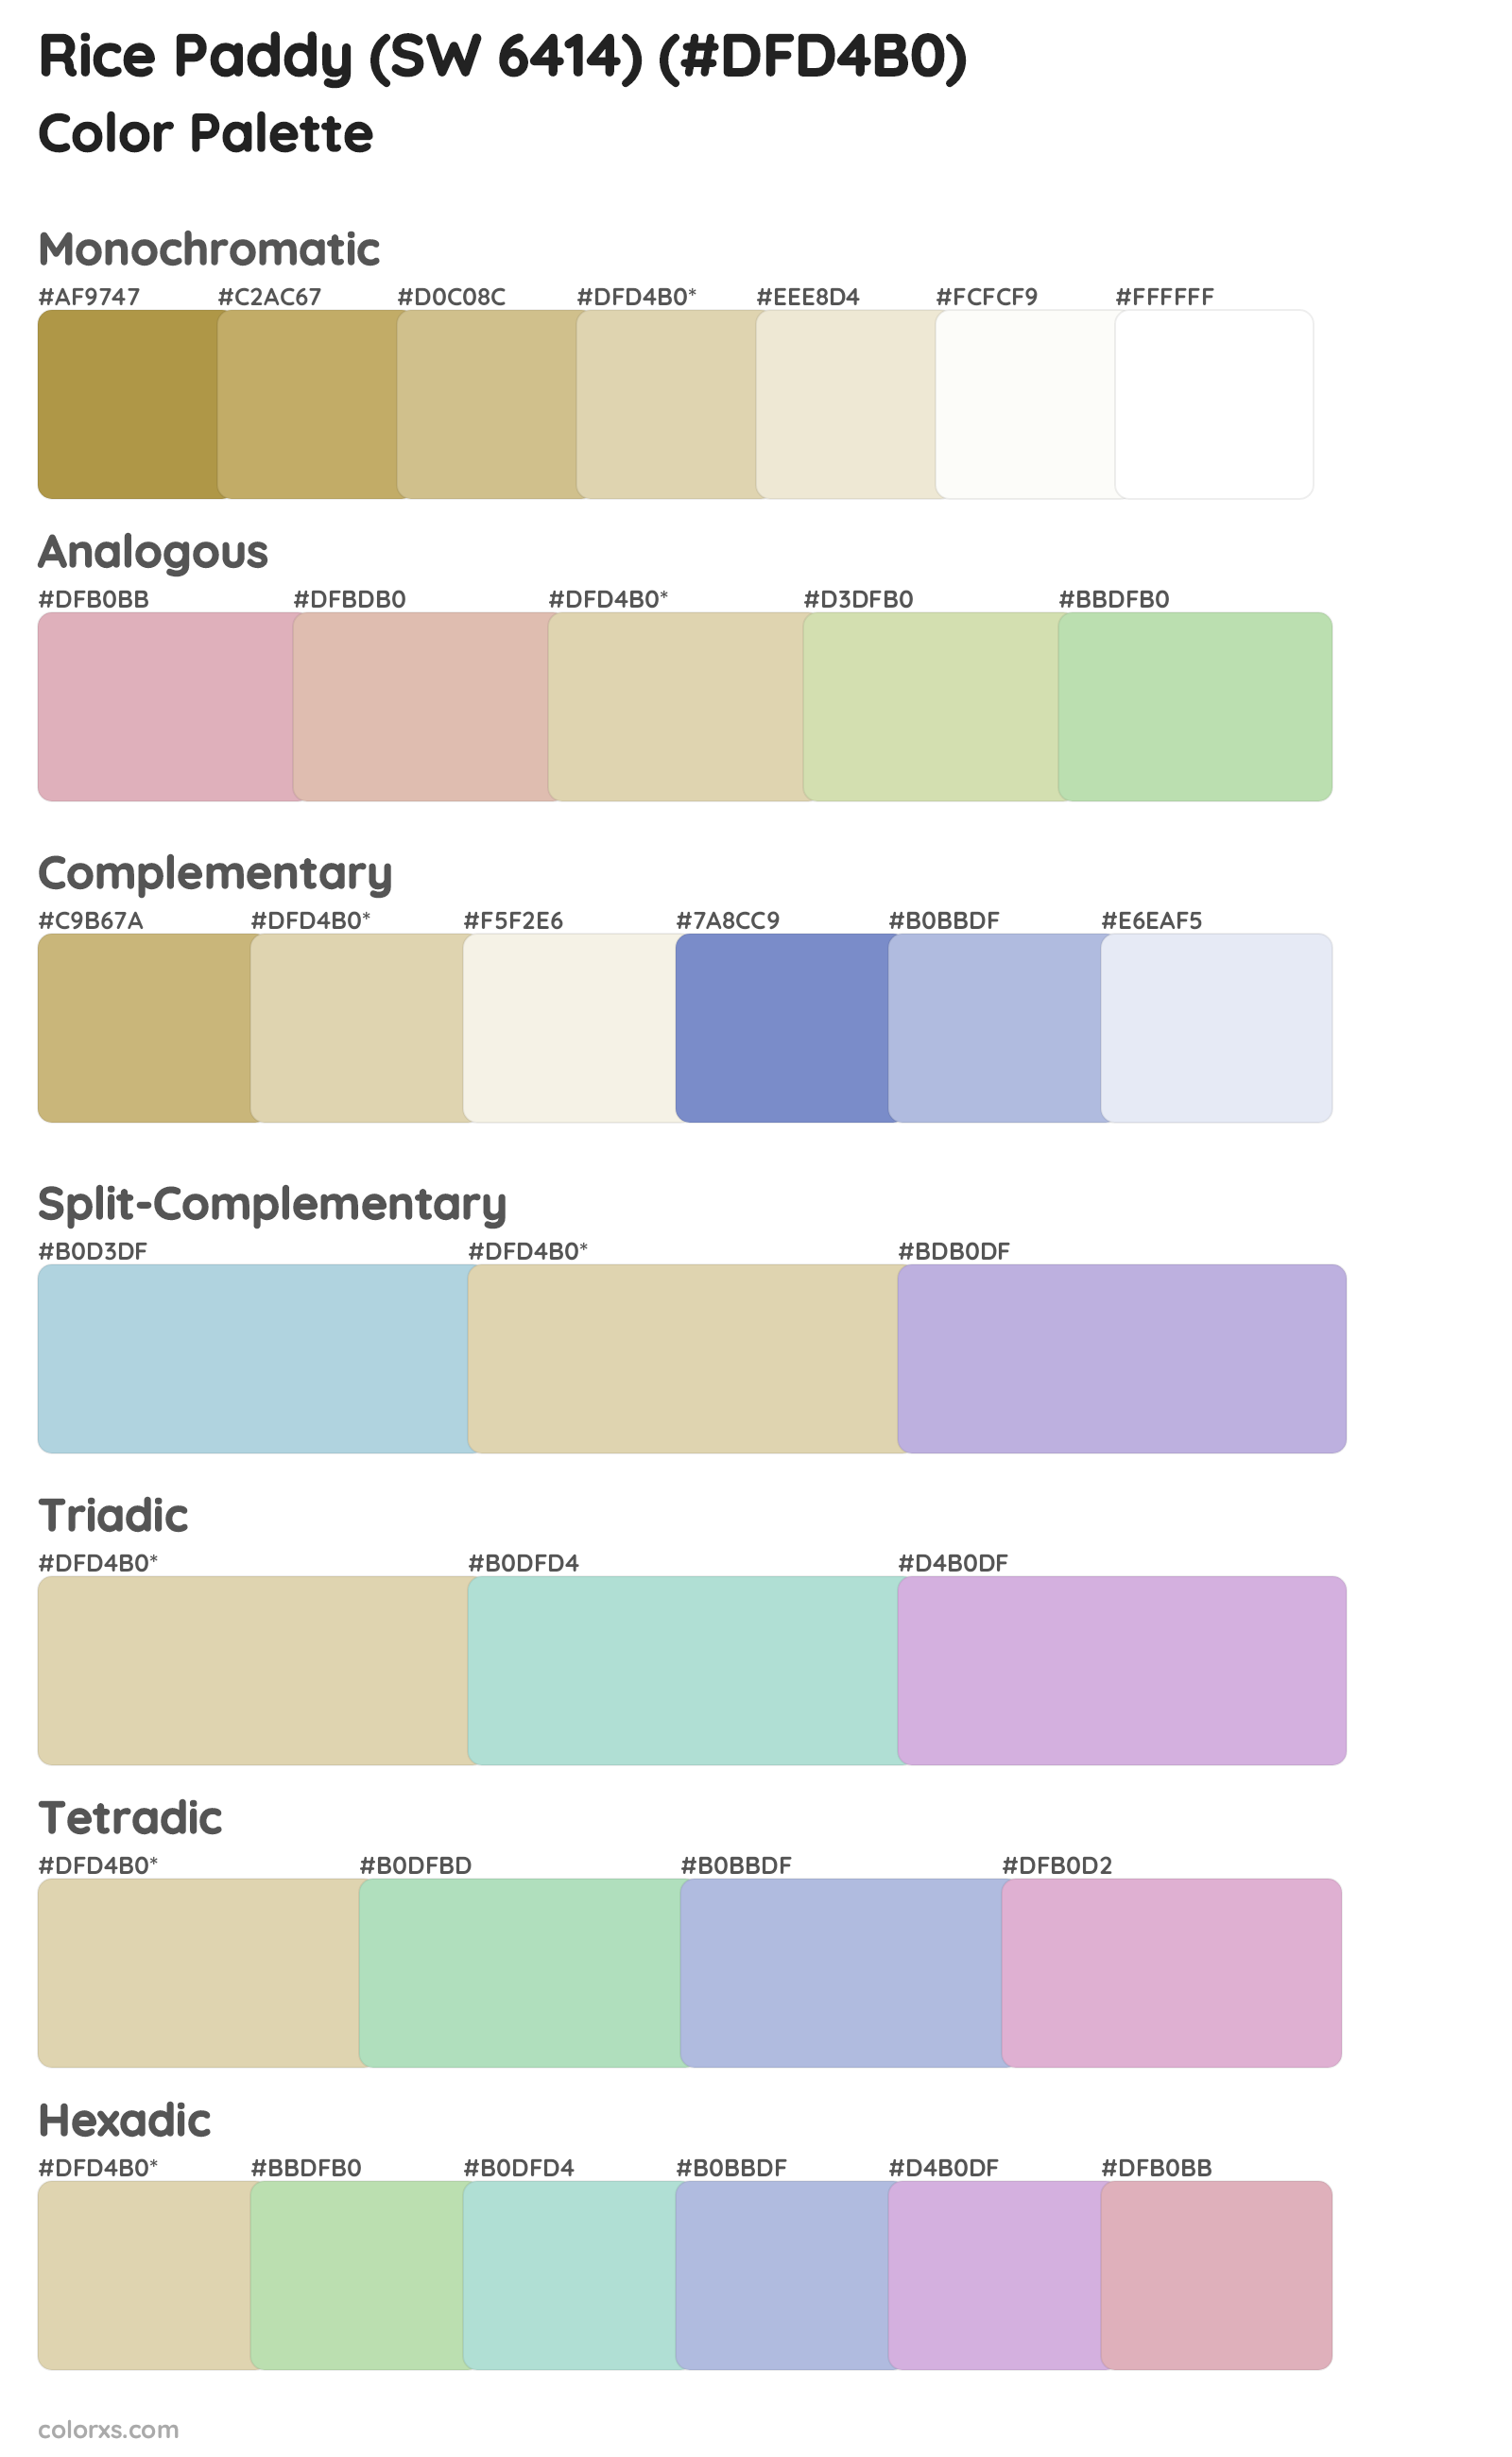 Rice Paddy (SW 6414) Color Scheme Palettes